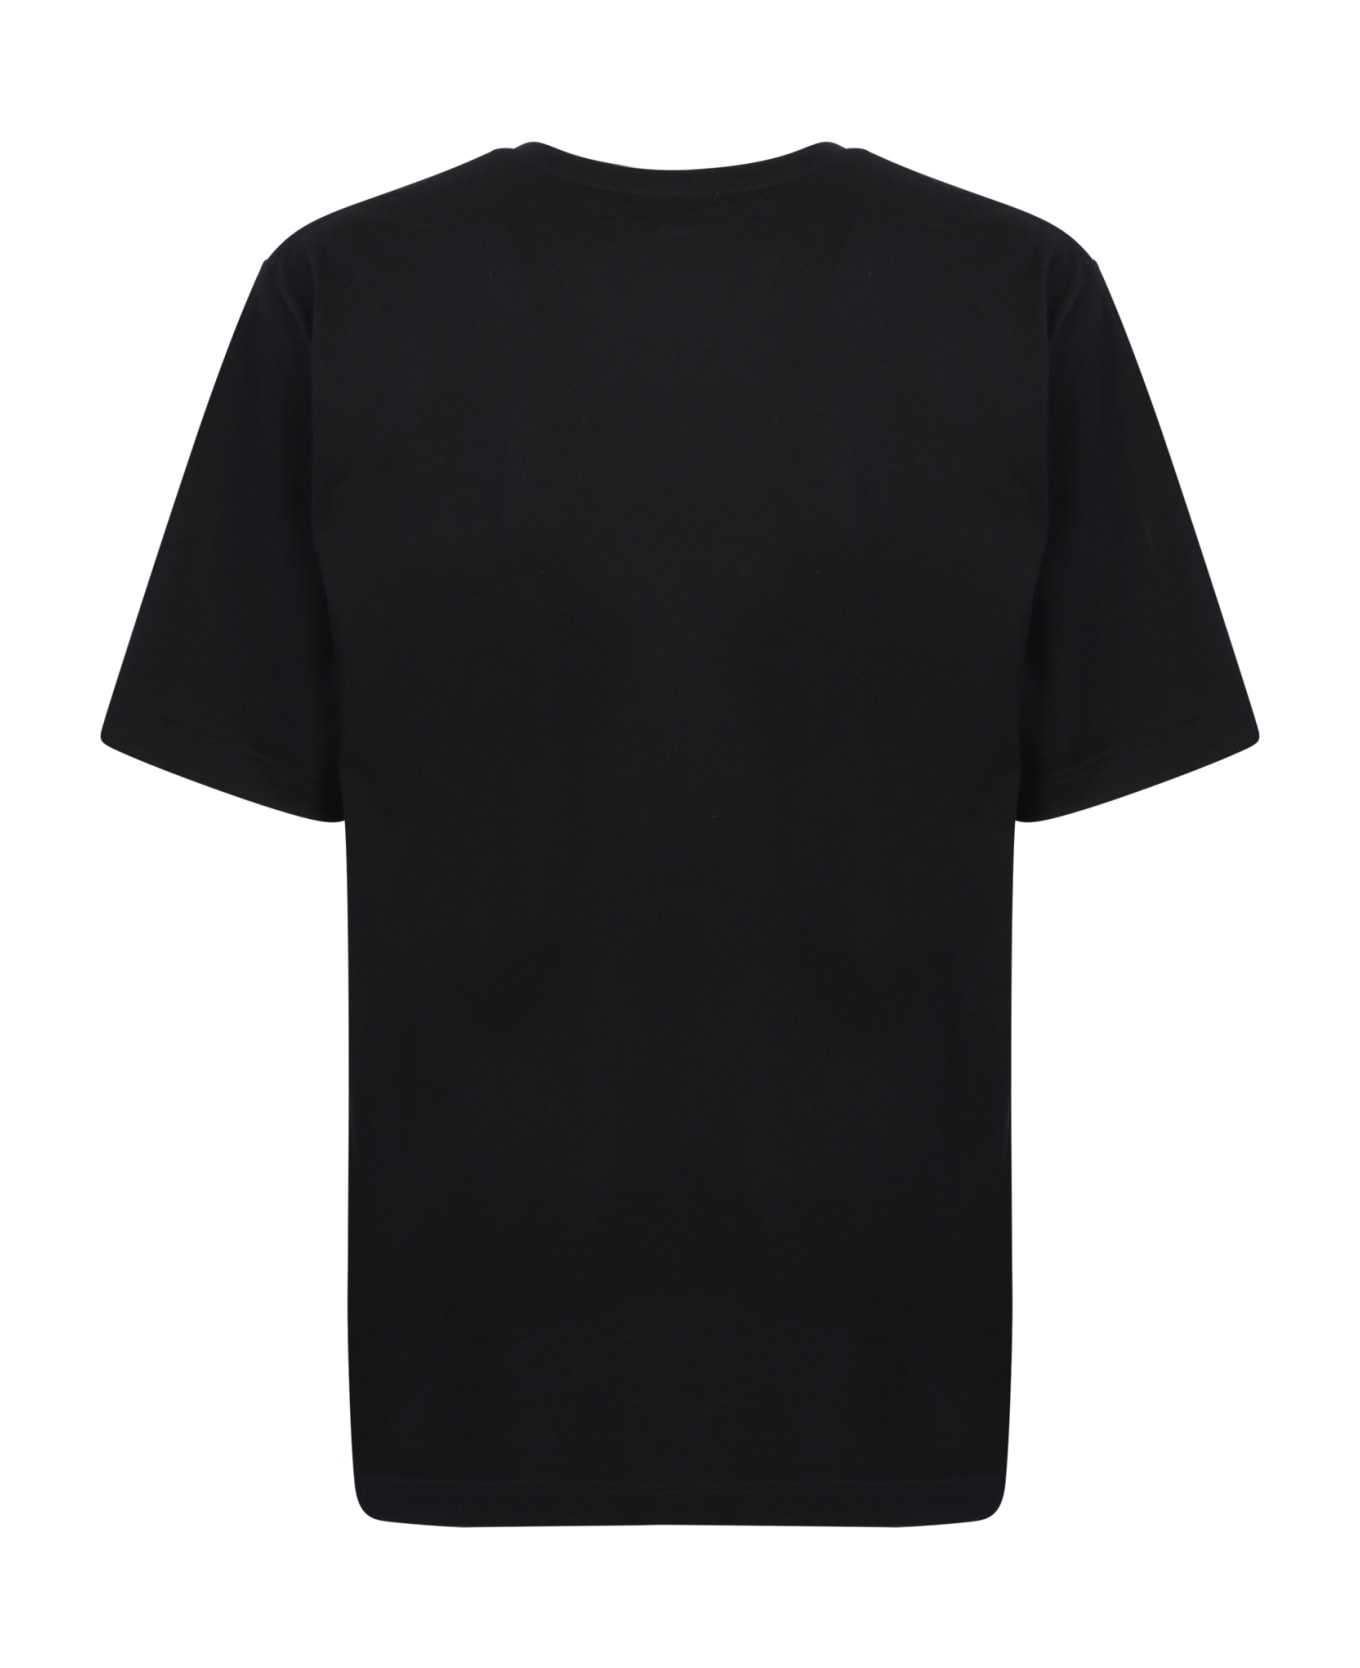 Giuseppe Zanotti Black Cotton T-shirt - Black シャツ